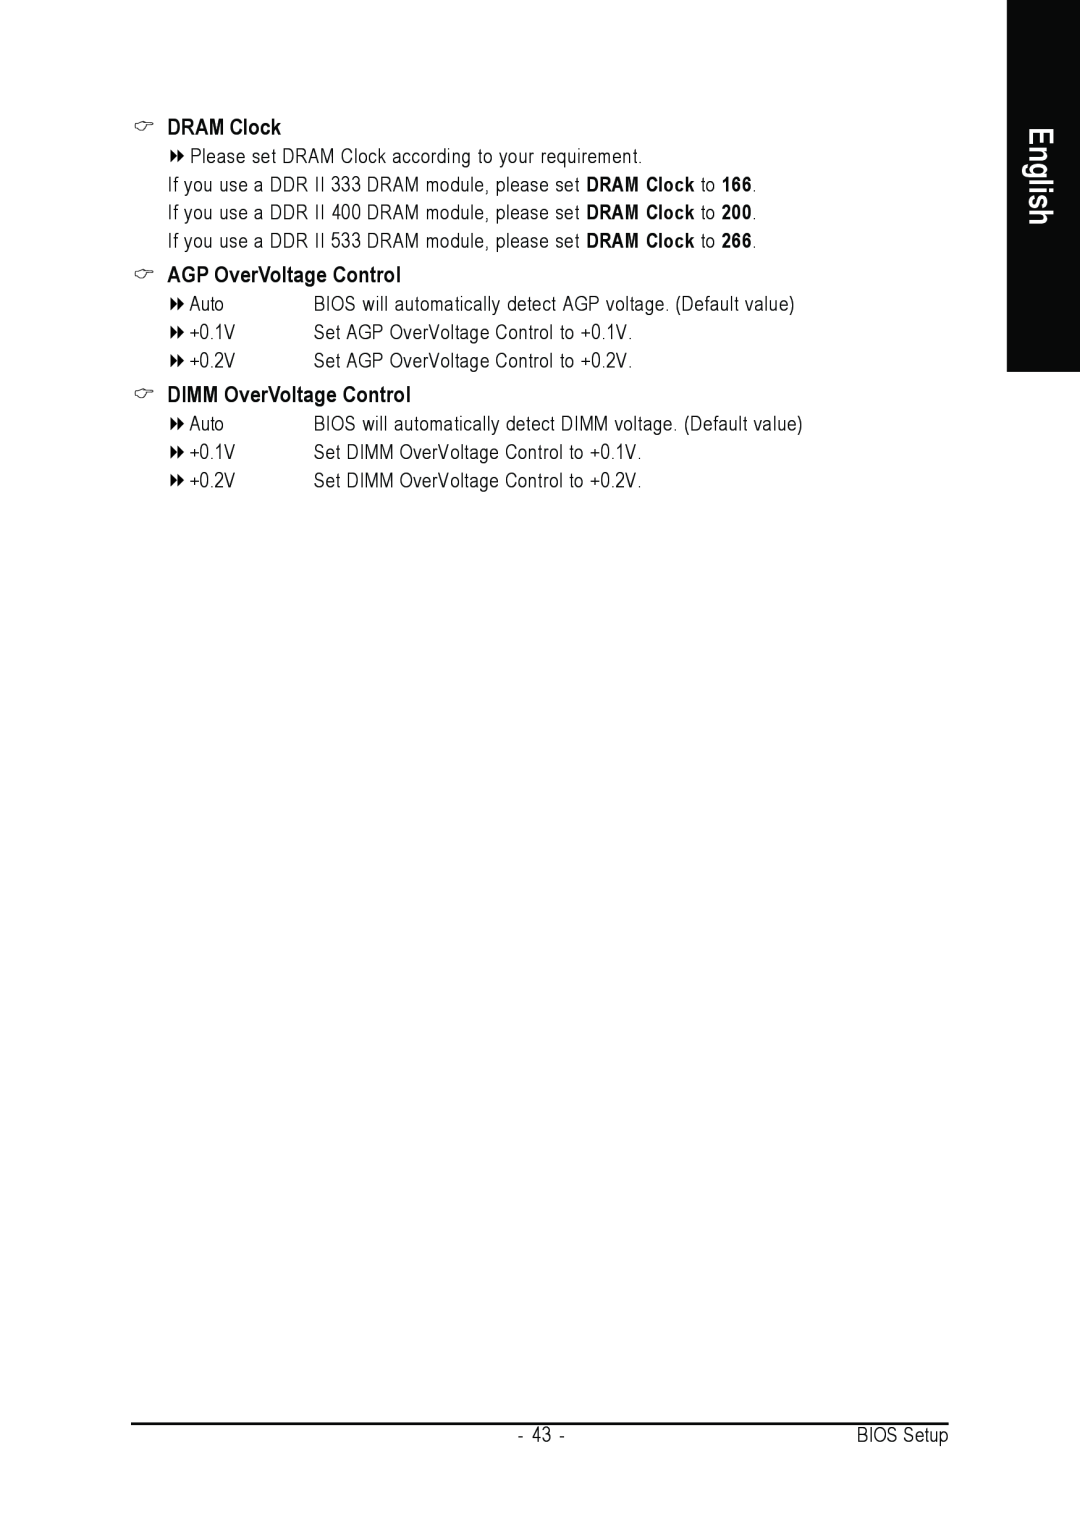 Intel GA-8VM800PMD-775 user manual DRAM Clock, AGP OverVoltage Control, DIMM OverVoltage Control, English 